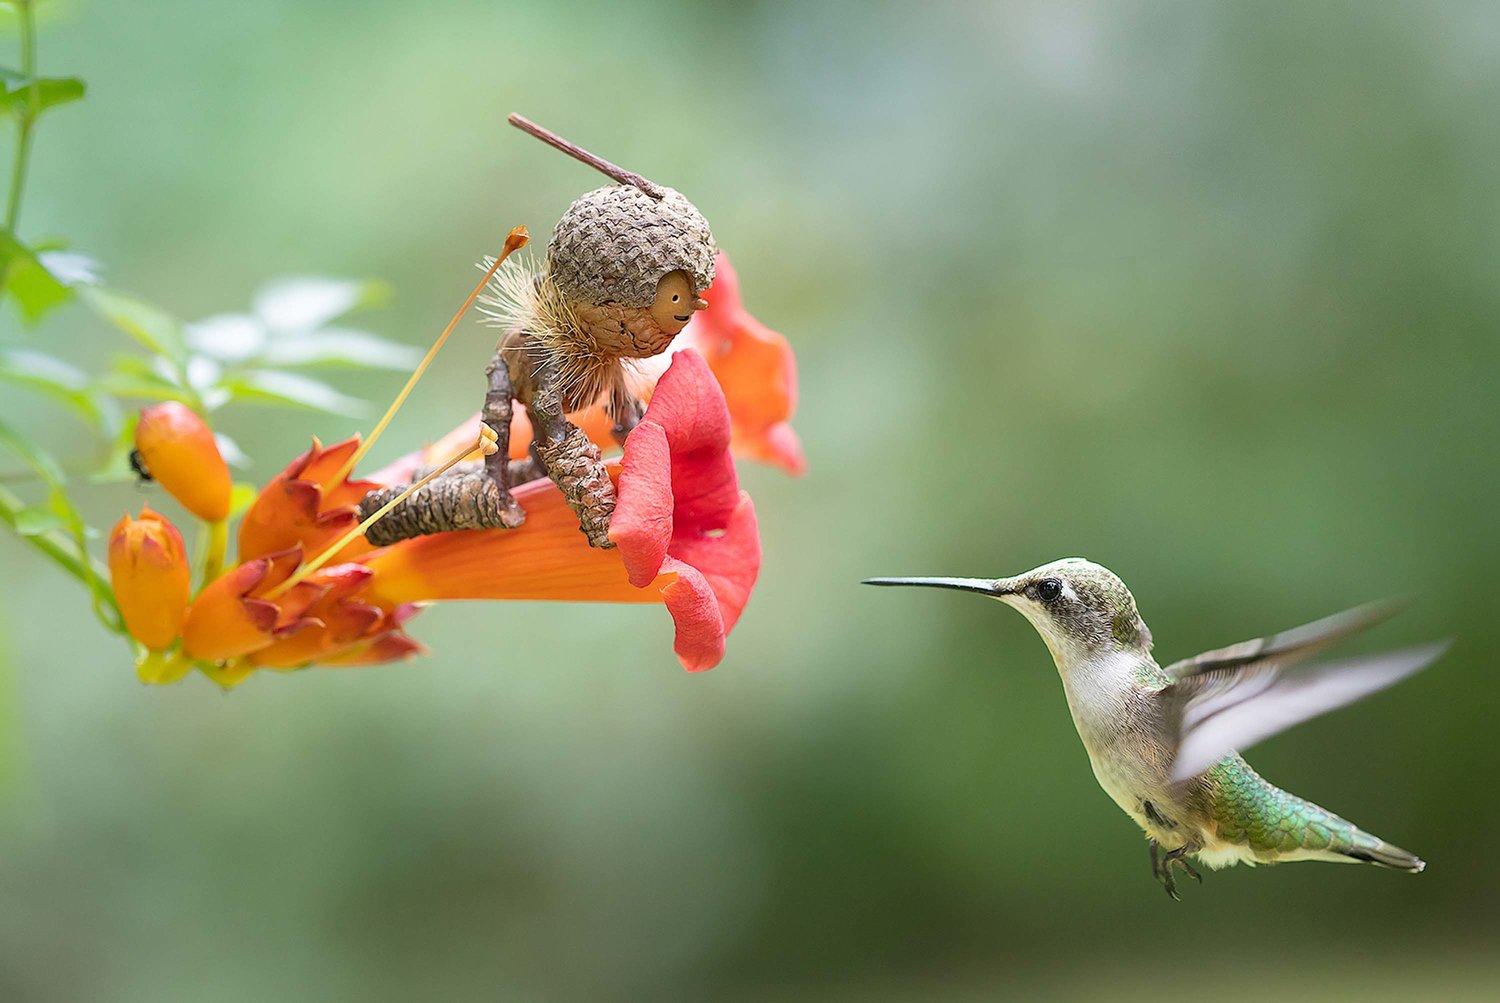 “Hummingbird”